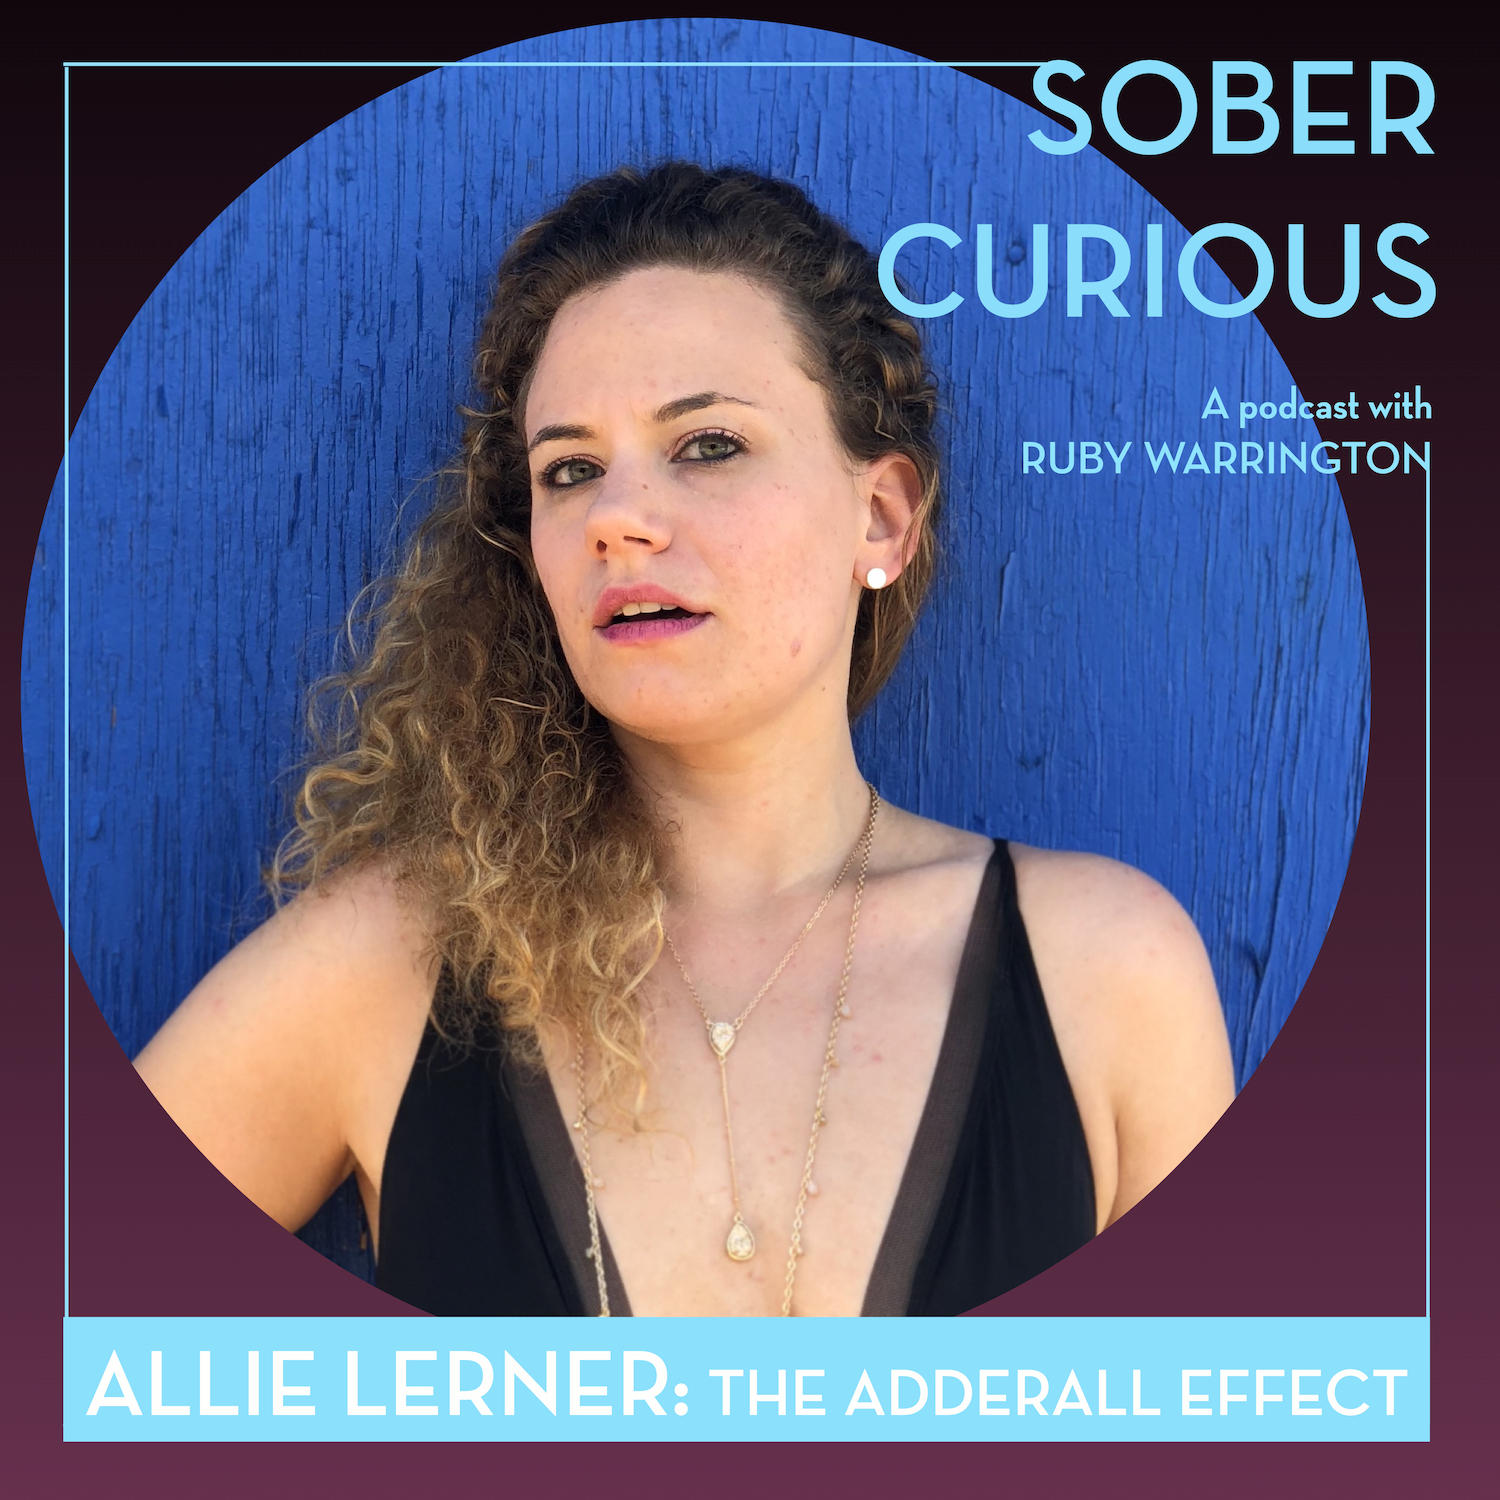 Allie Lerner adderall addiction sober curious podcast ruby warrington